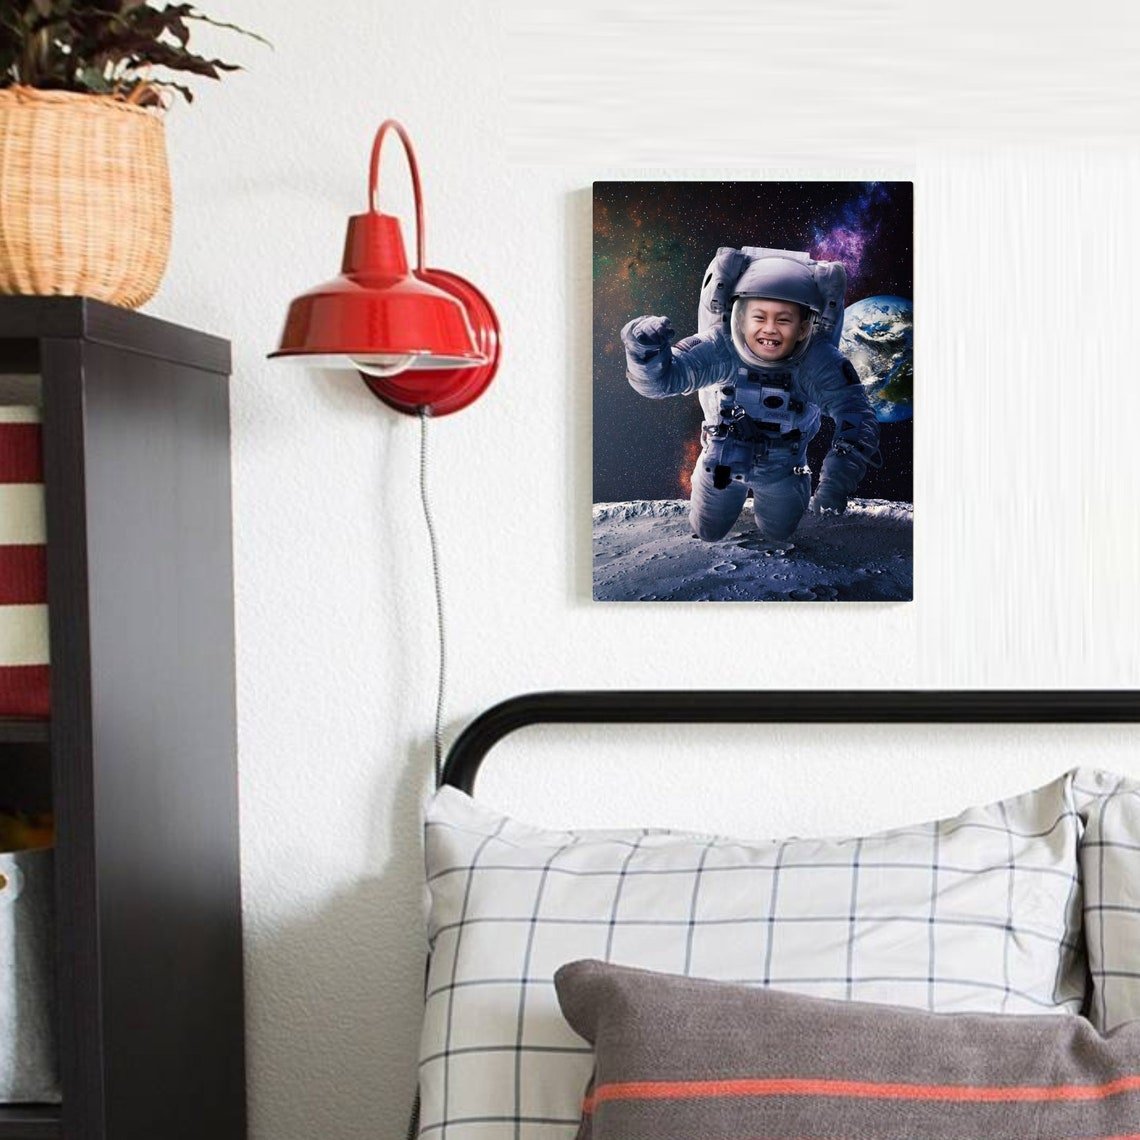 The Astronaut Over the Moon Custom Gift For Kids at My Kid's Dream mykidsdream.com